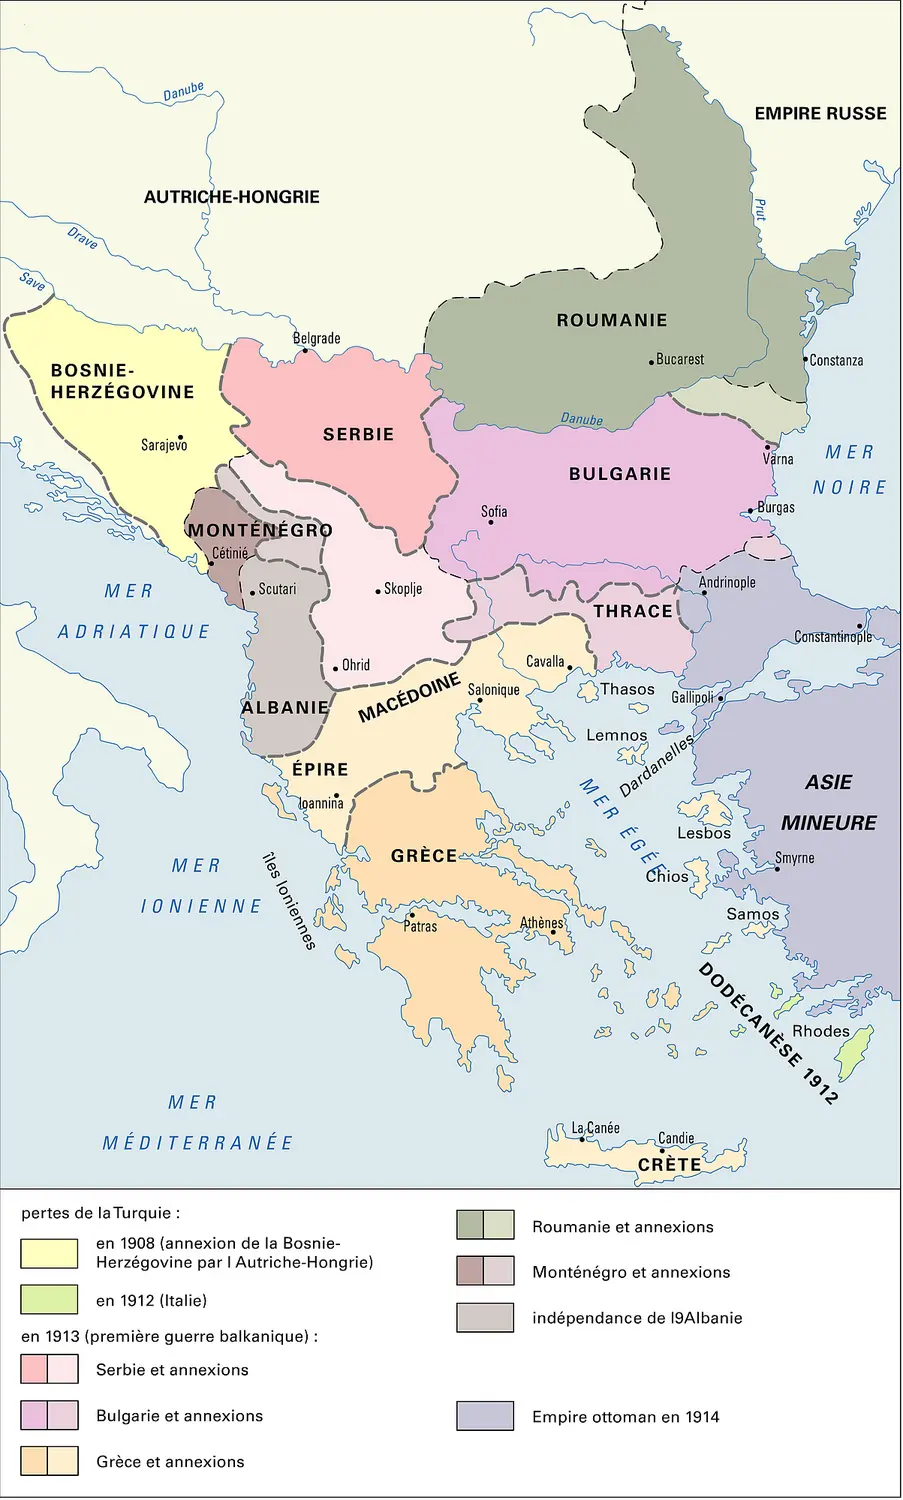 Empire ottoman, recul turc en Europe, XX<sup>e</sup> siècle